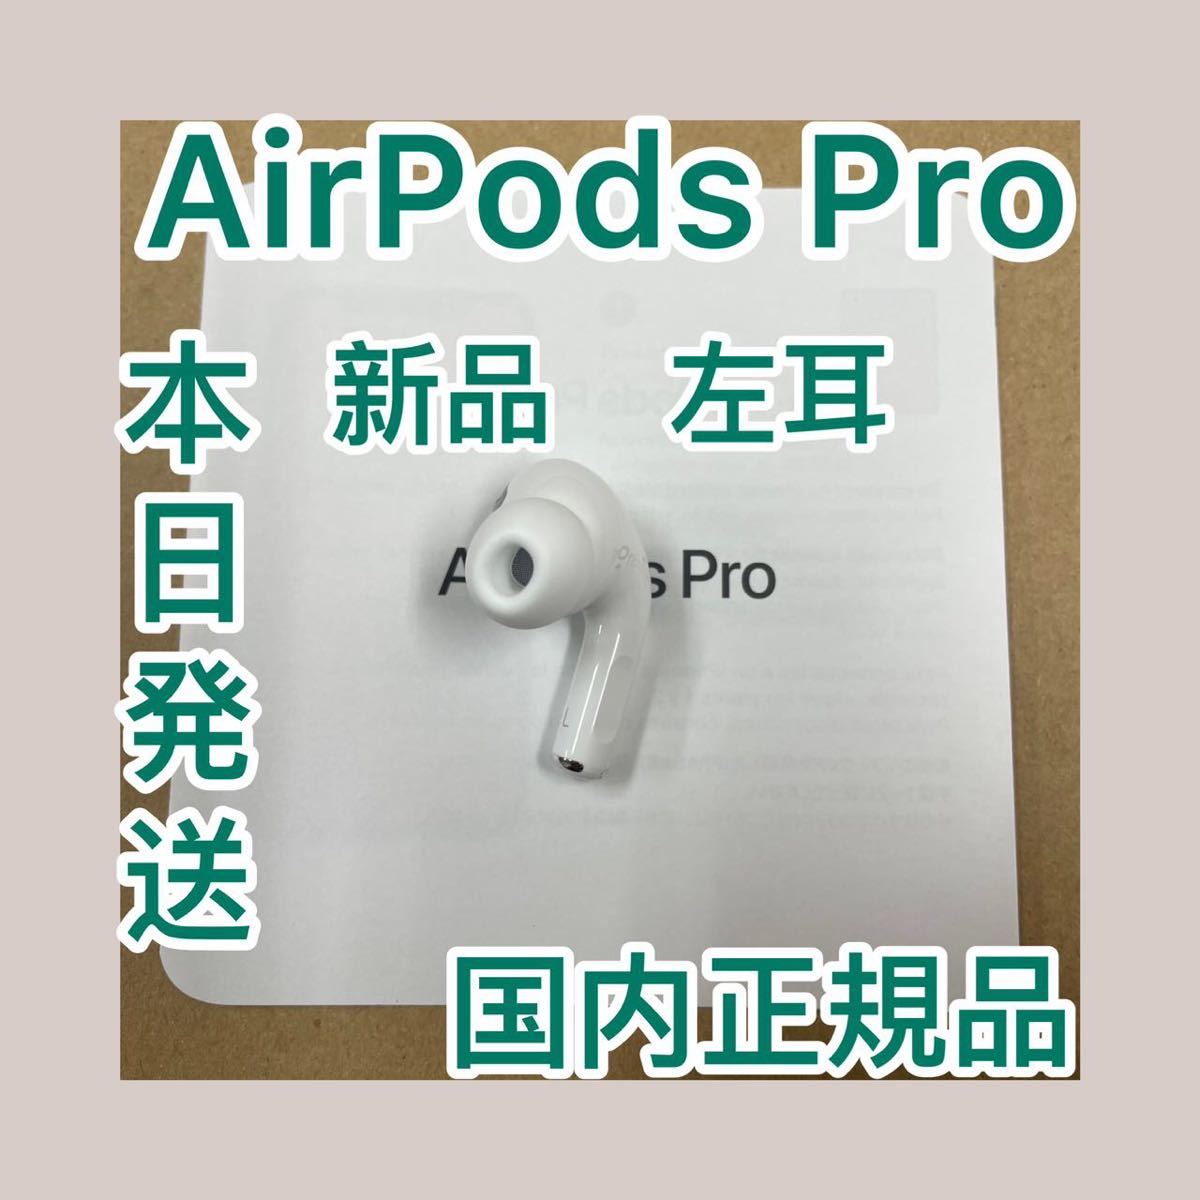 AirPods Pro 第一世代 新品 左耳 Apple L片耳 正規品 エアーポッズプロ 